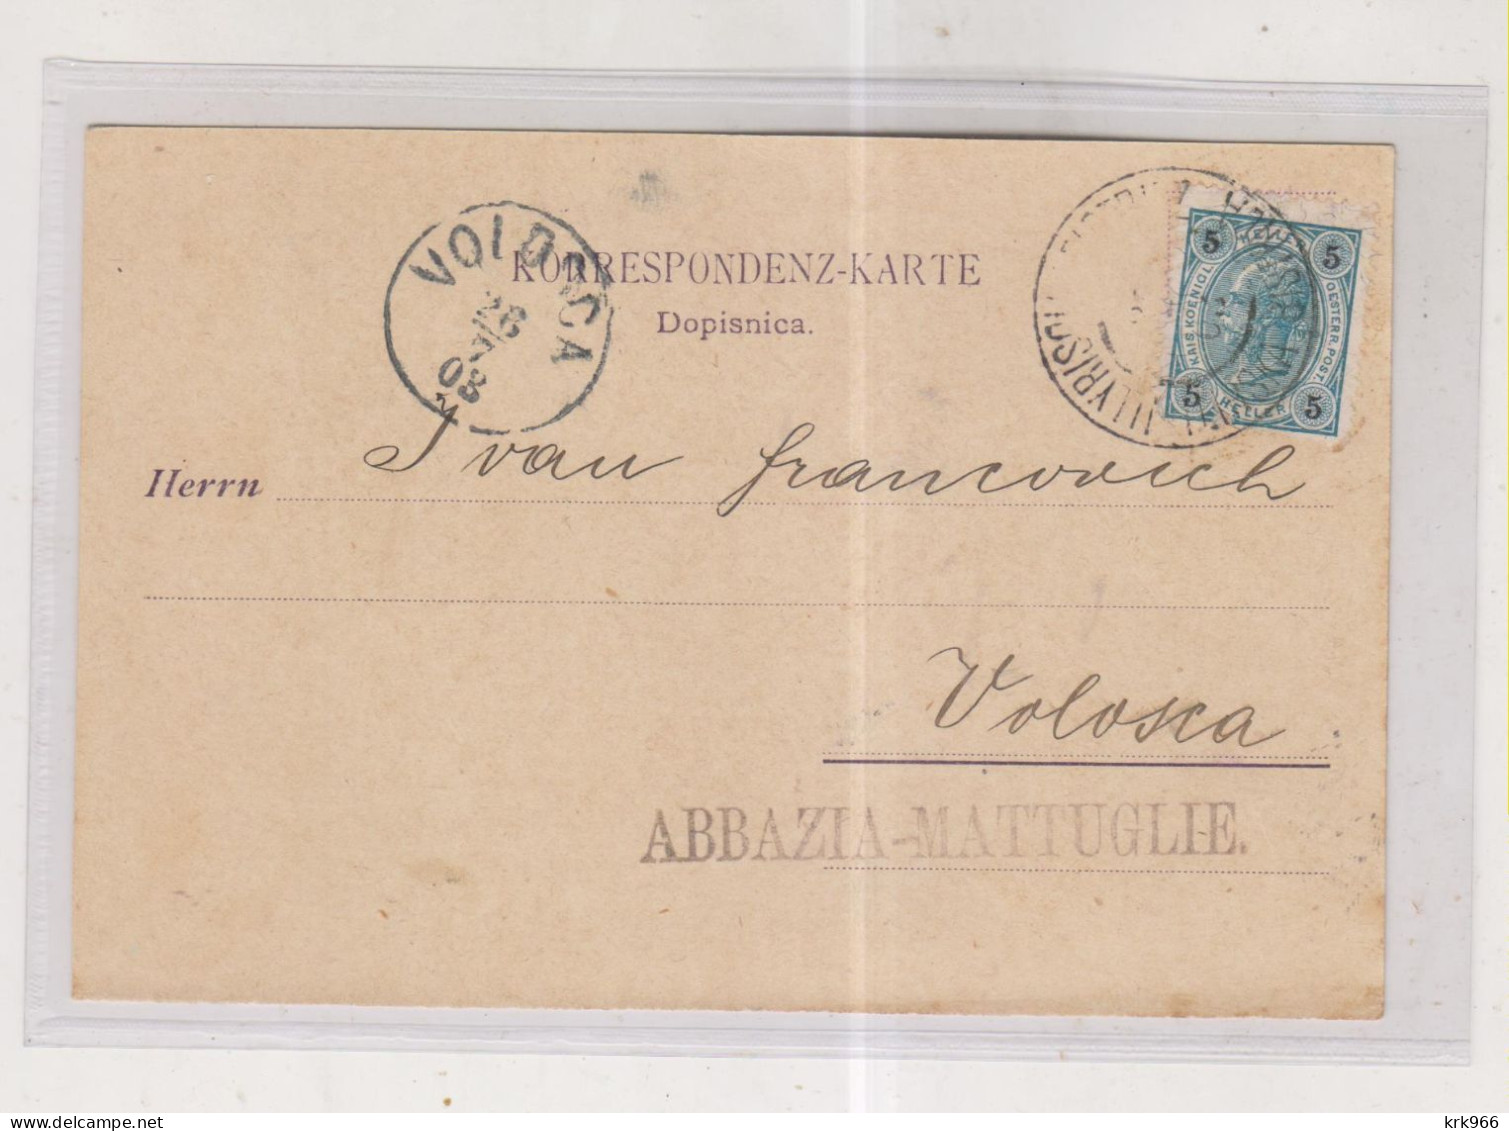 SLOVENIA AUSTRIA 1903 ILIRSKA BISTRICA Nice Postcard To Volosca Volosko Croatia - Slovenia